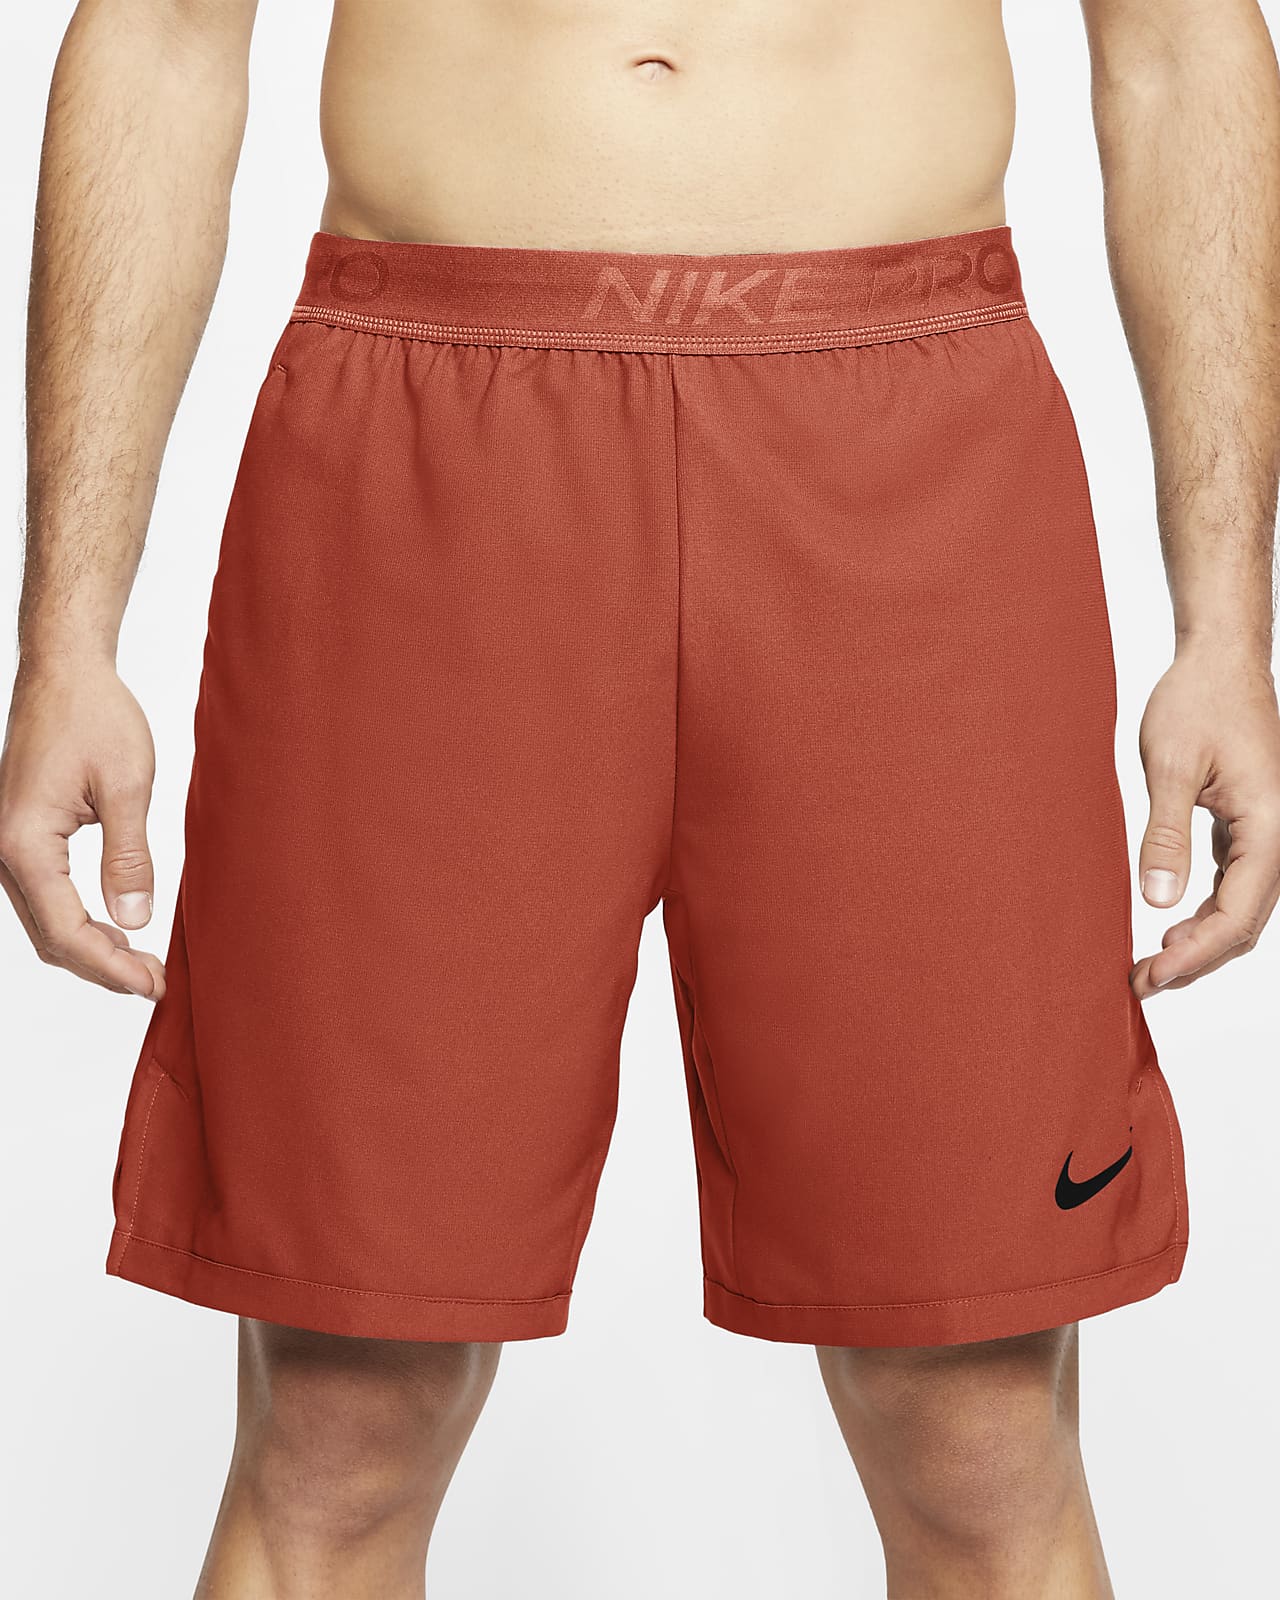 nike pro max shorts